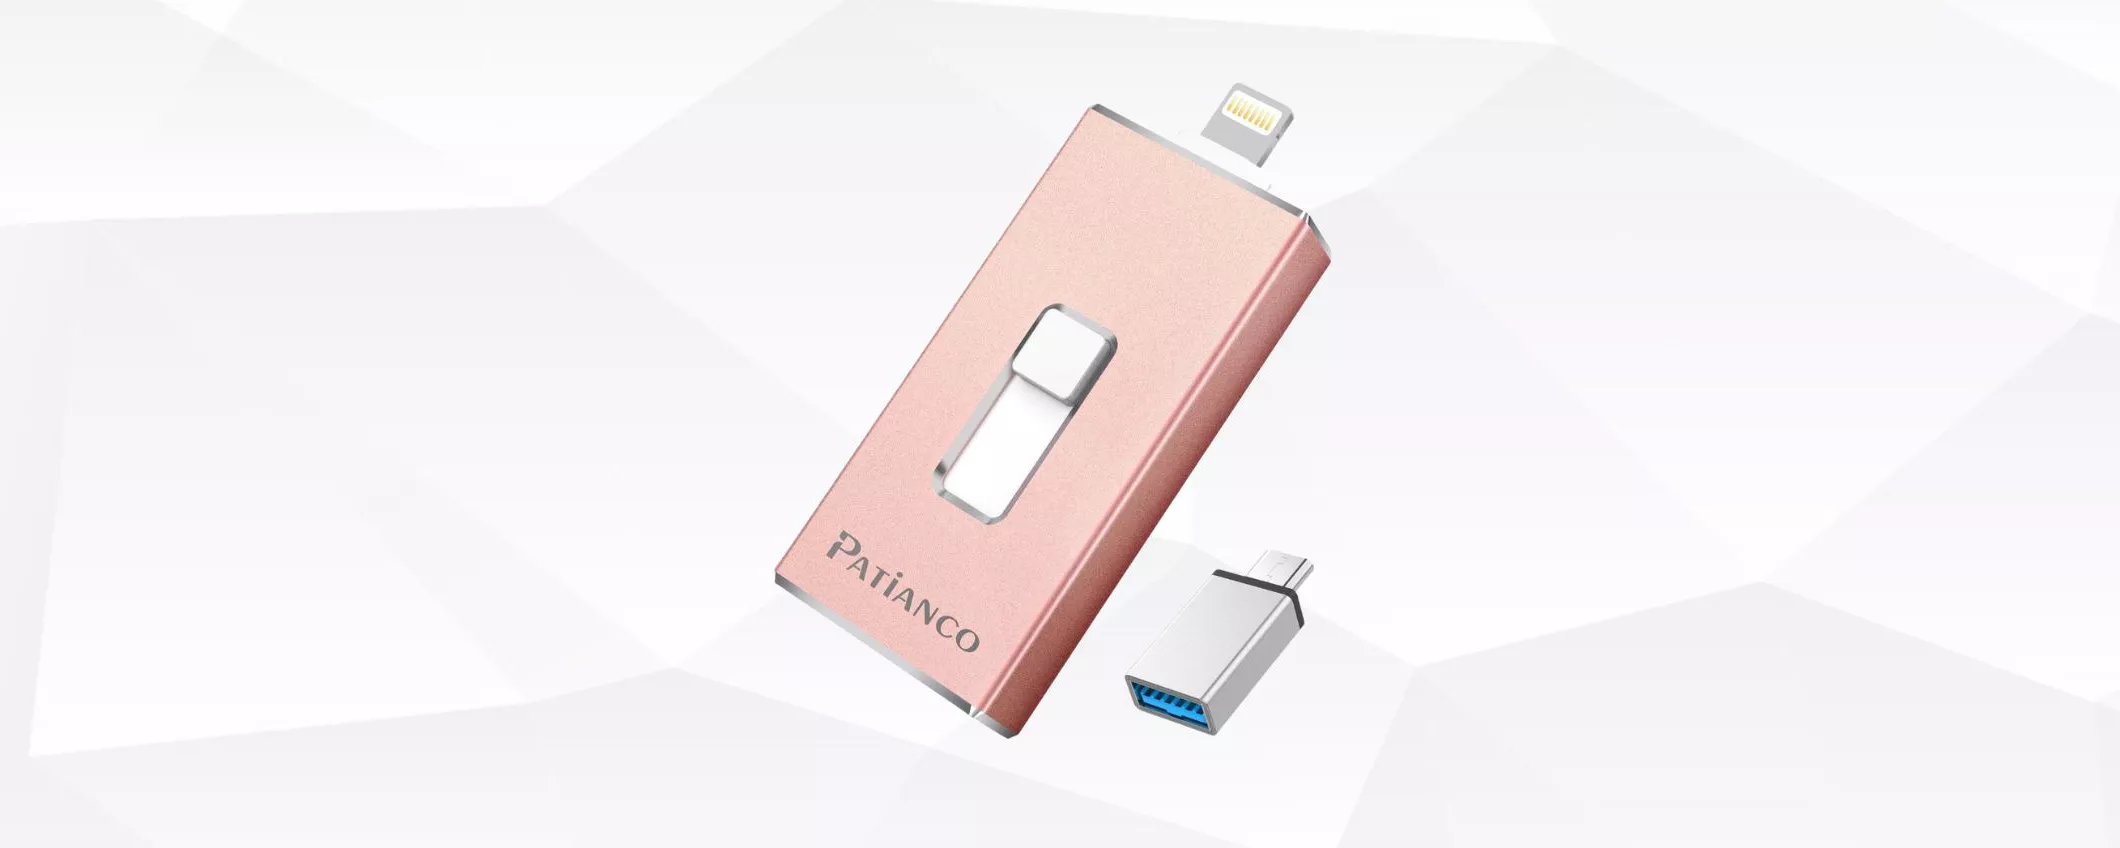 Chiavetta USB per iPhone certificata Apple: RISPARMI €12